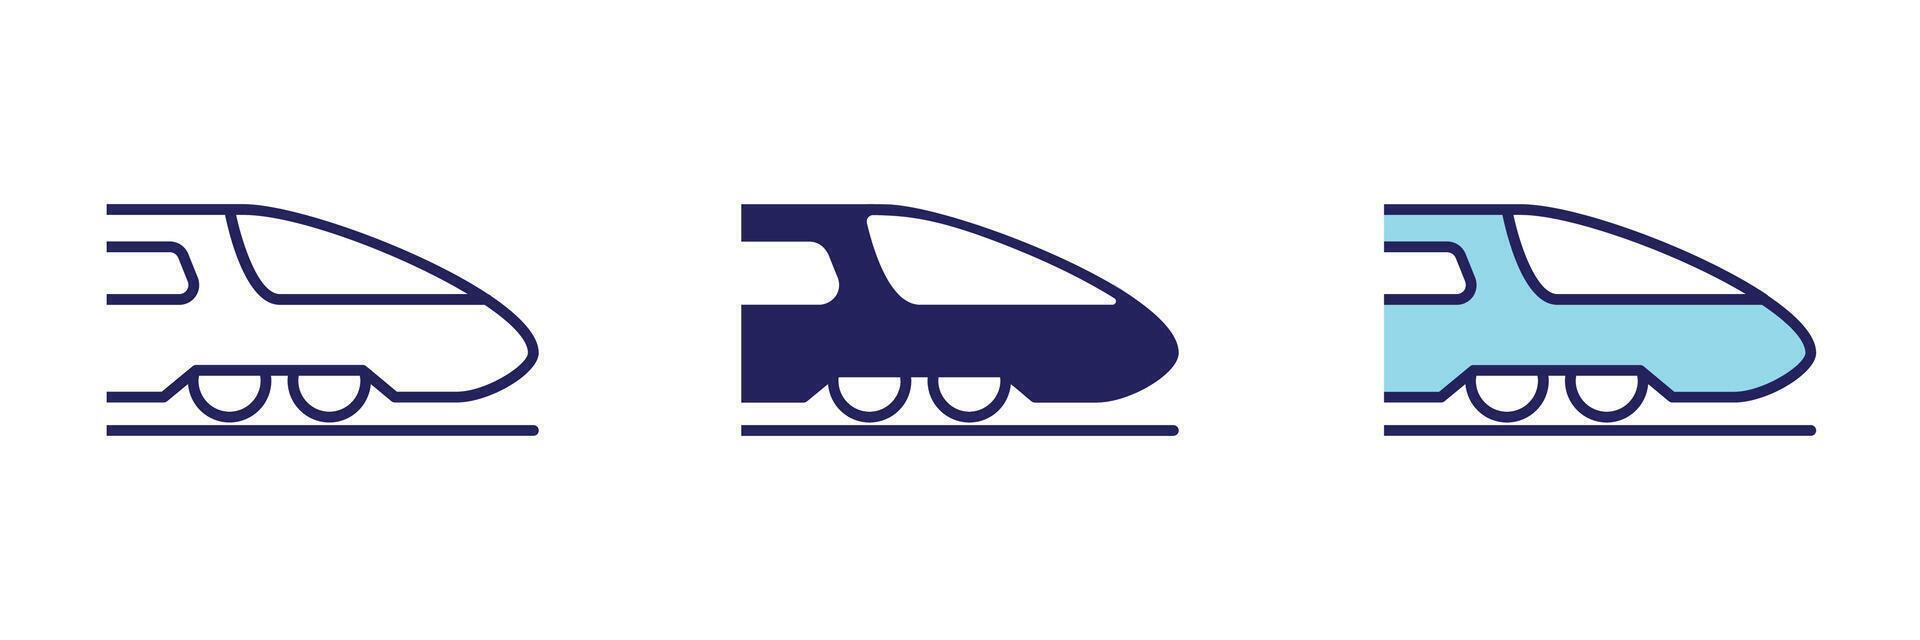 Train Transportation Icon - Navigation Set vector